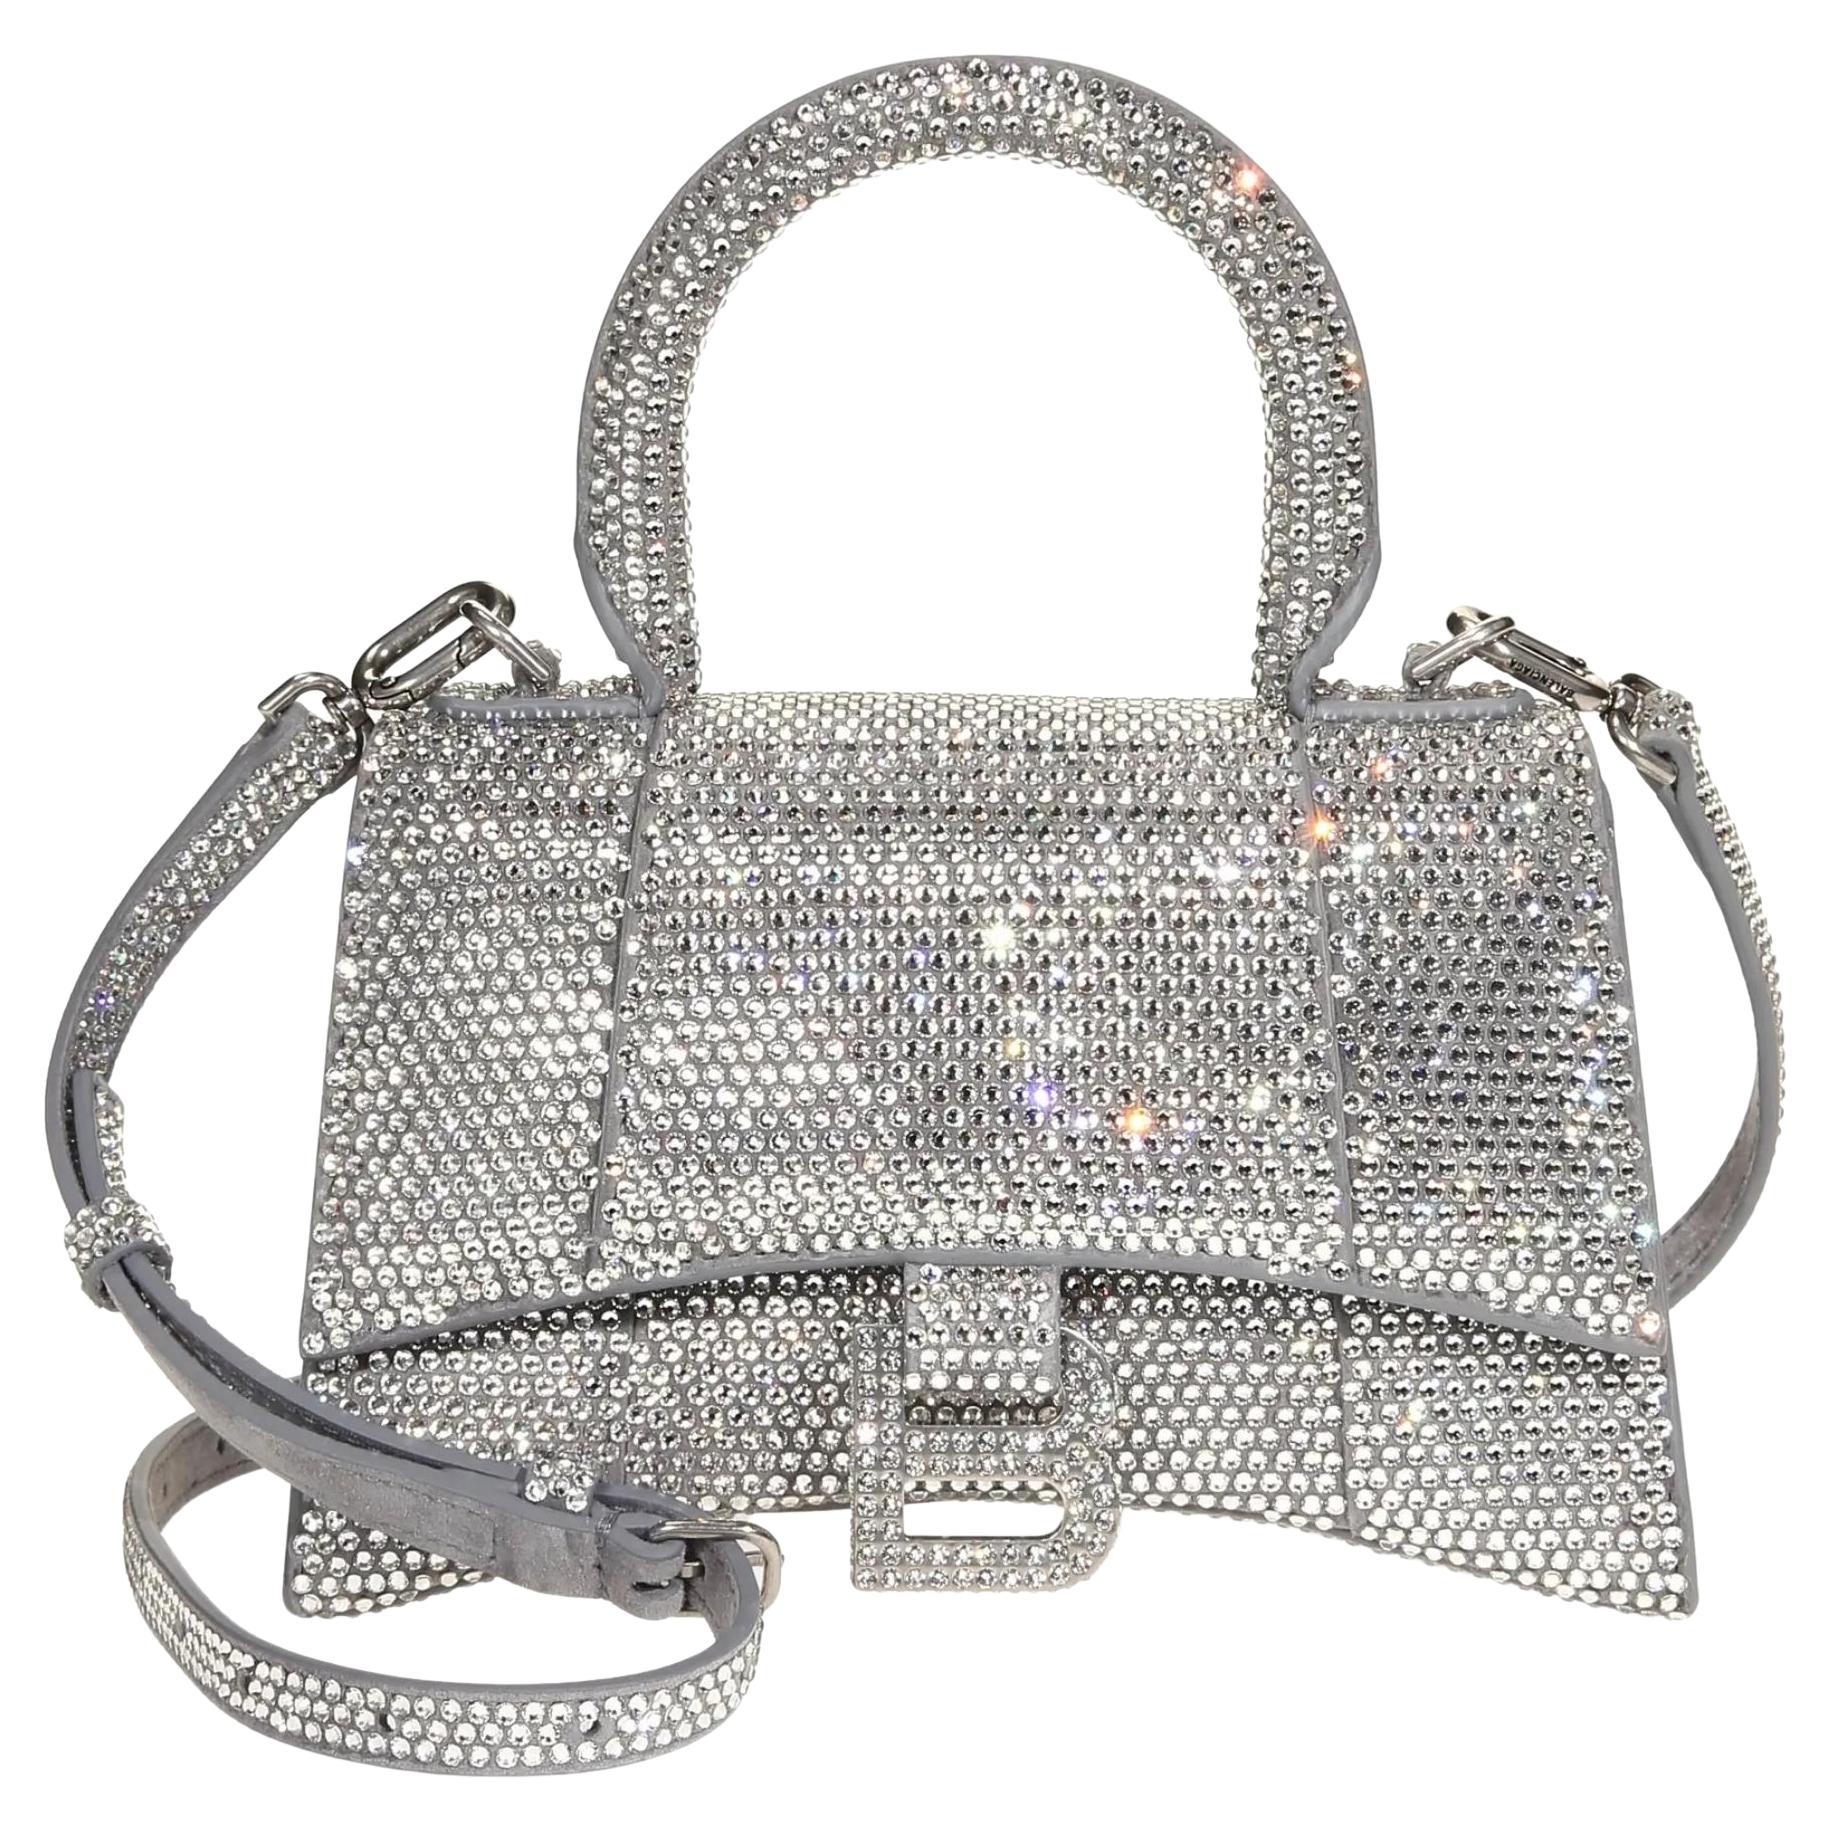 Hourglass handbag Balenciaga Silver in Suede - 25177611